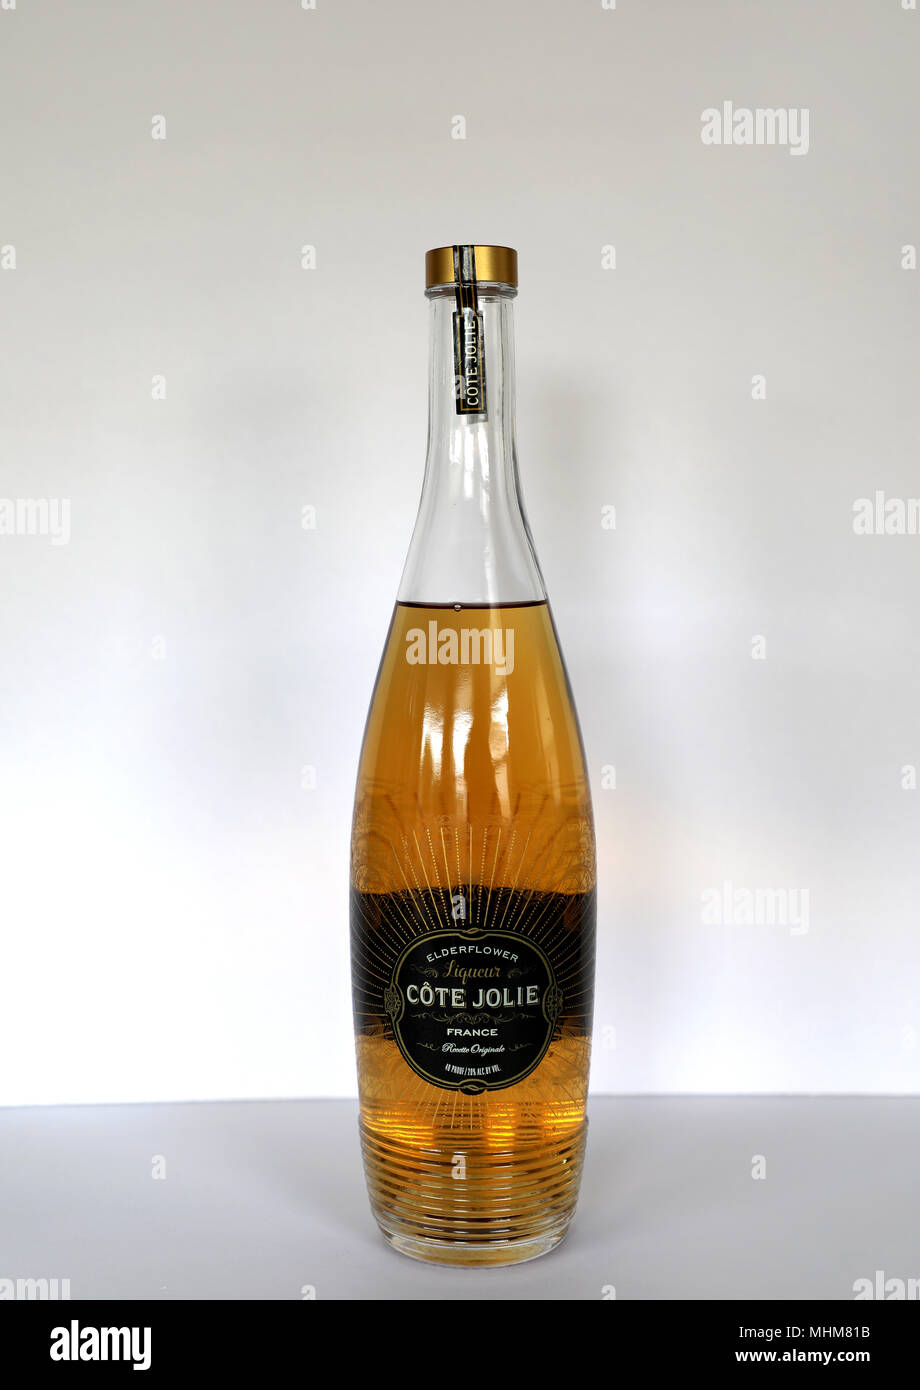 Cote Jolie Elderflower Liqueur Product Of France 20% Alcohol Bottle on  White Background Stock Photo - Alamy